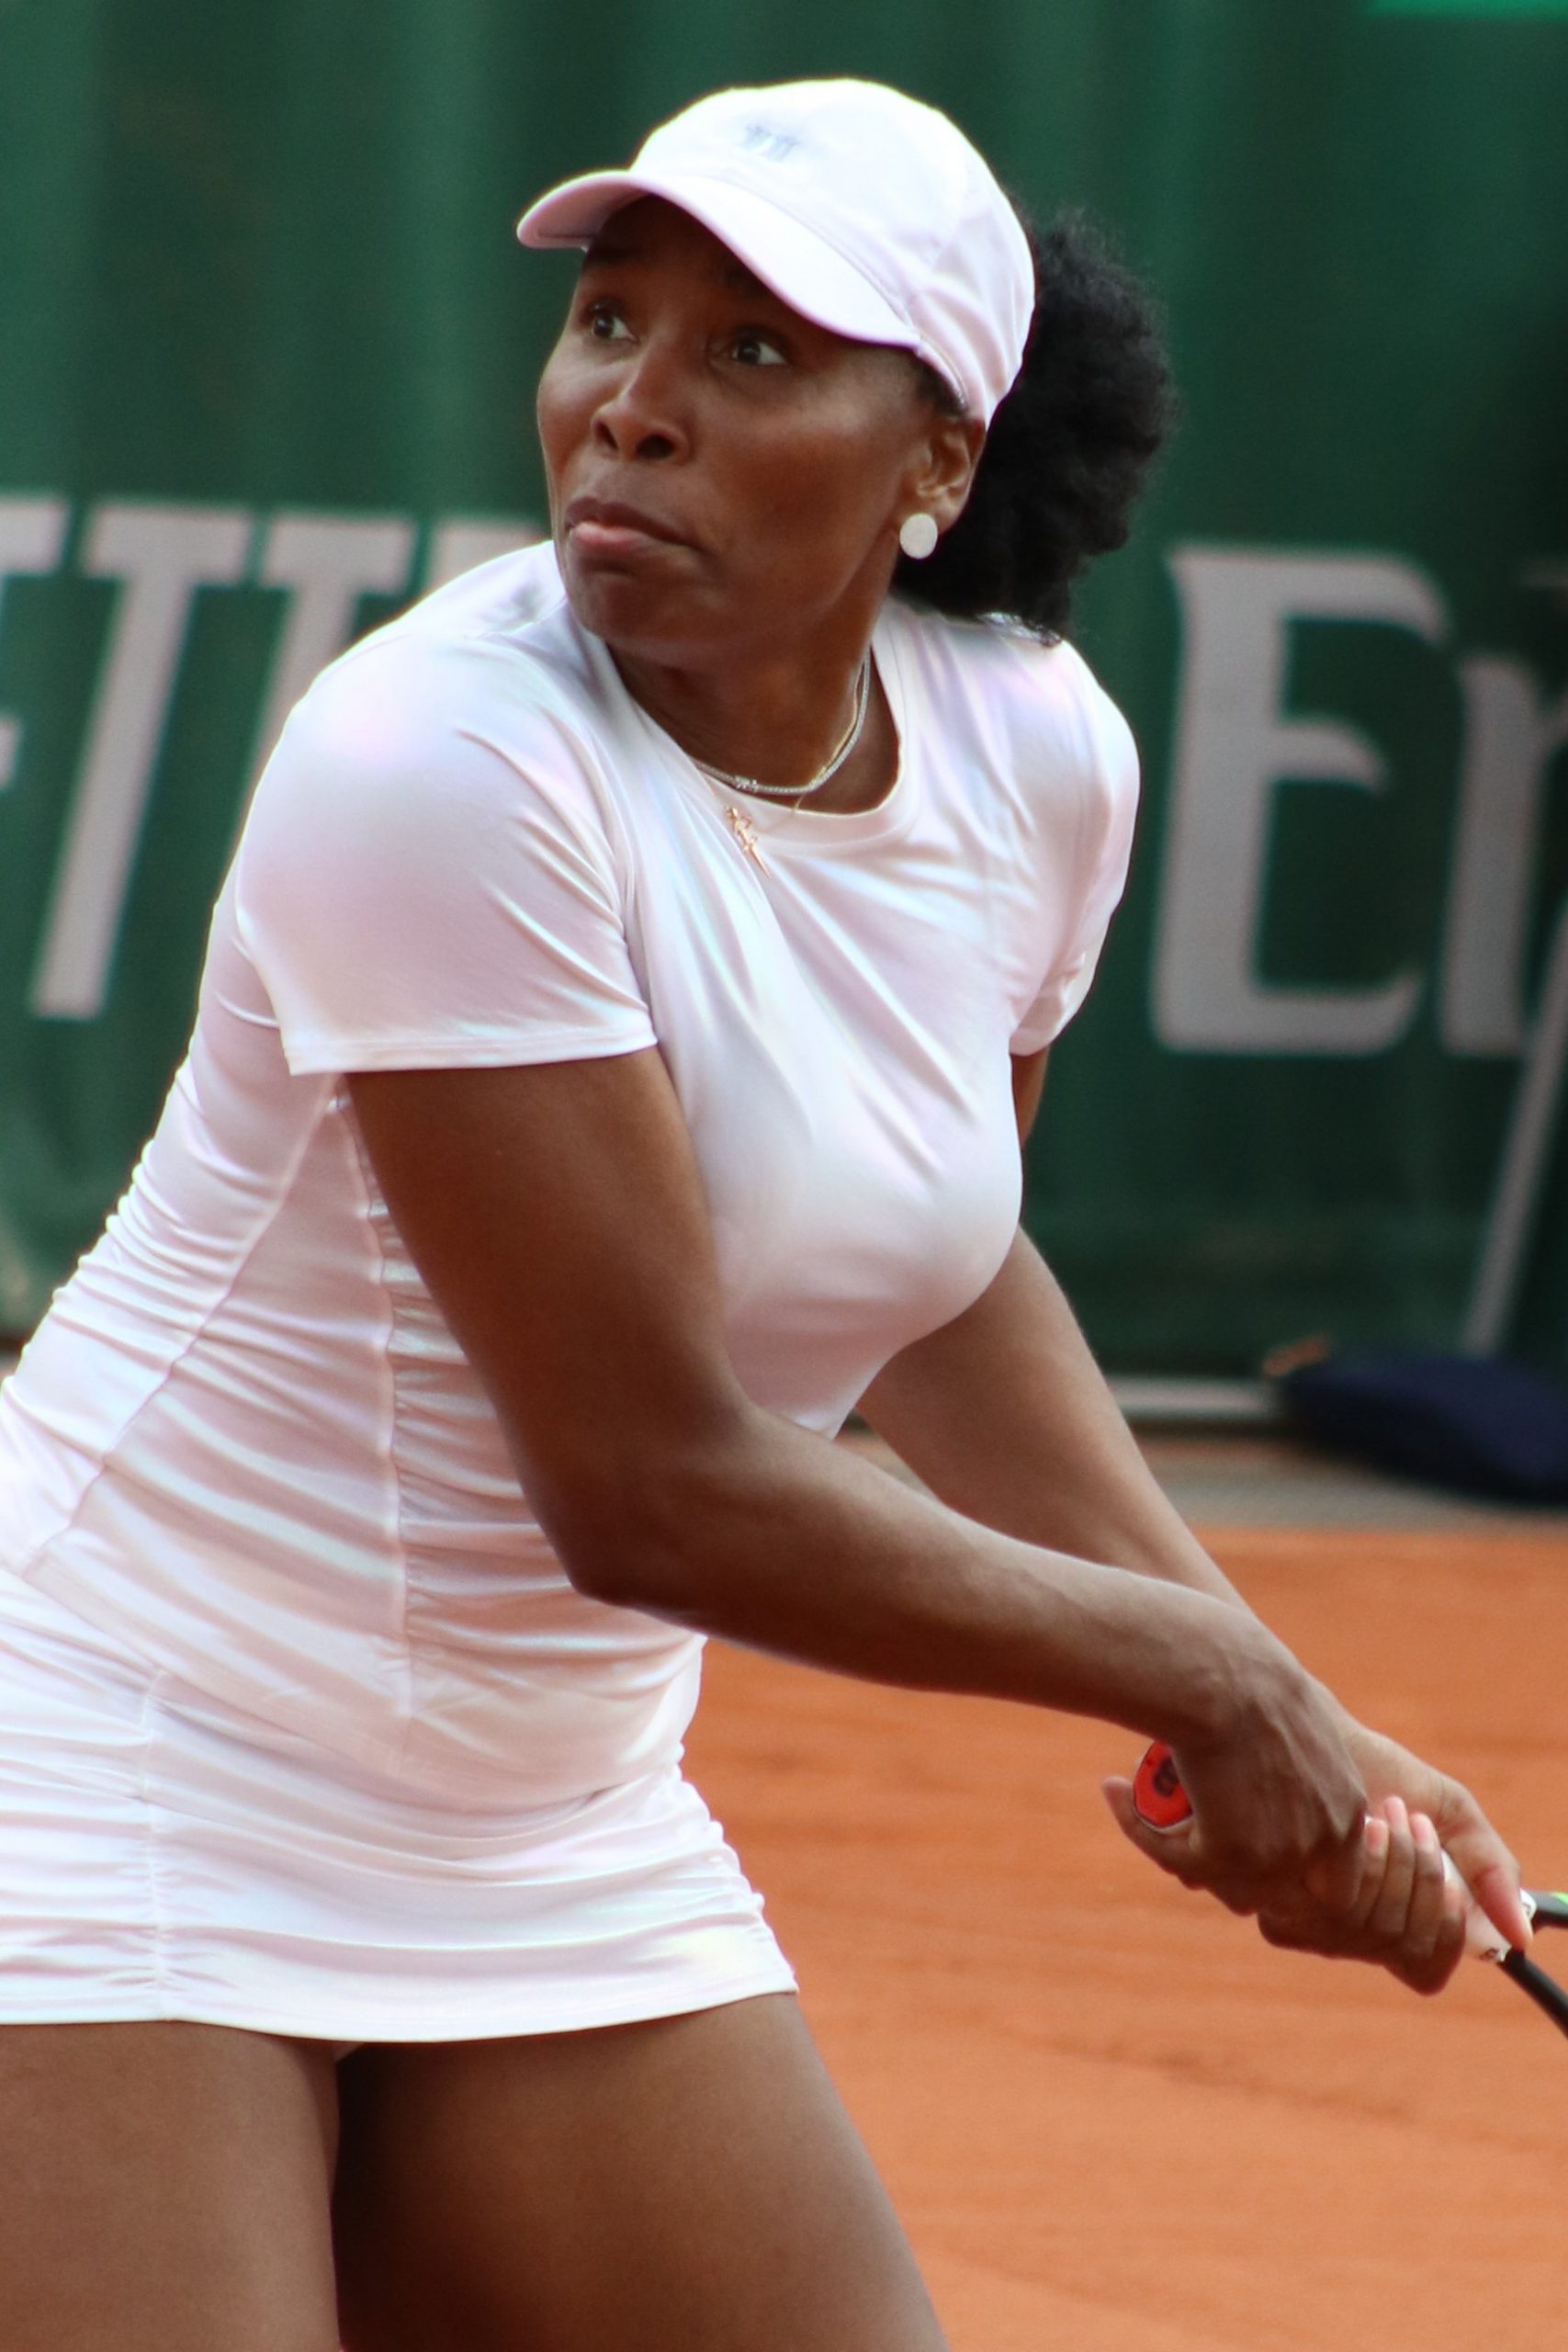 Venus Williams U.S. tennis player